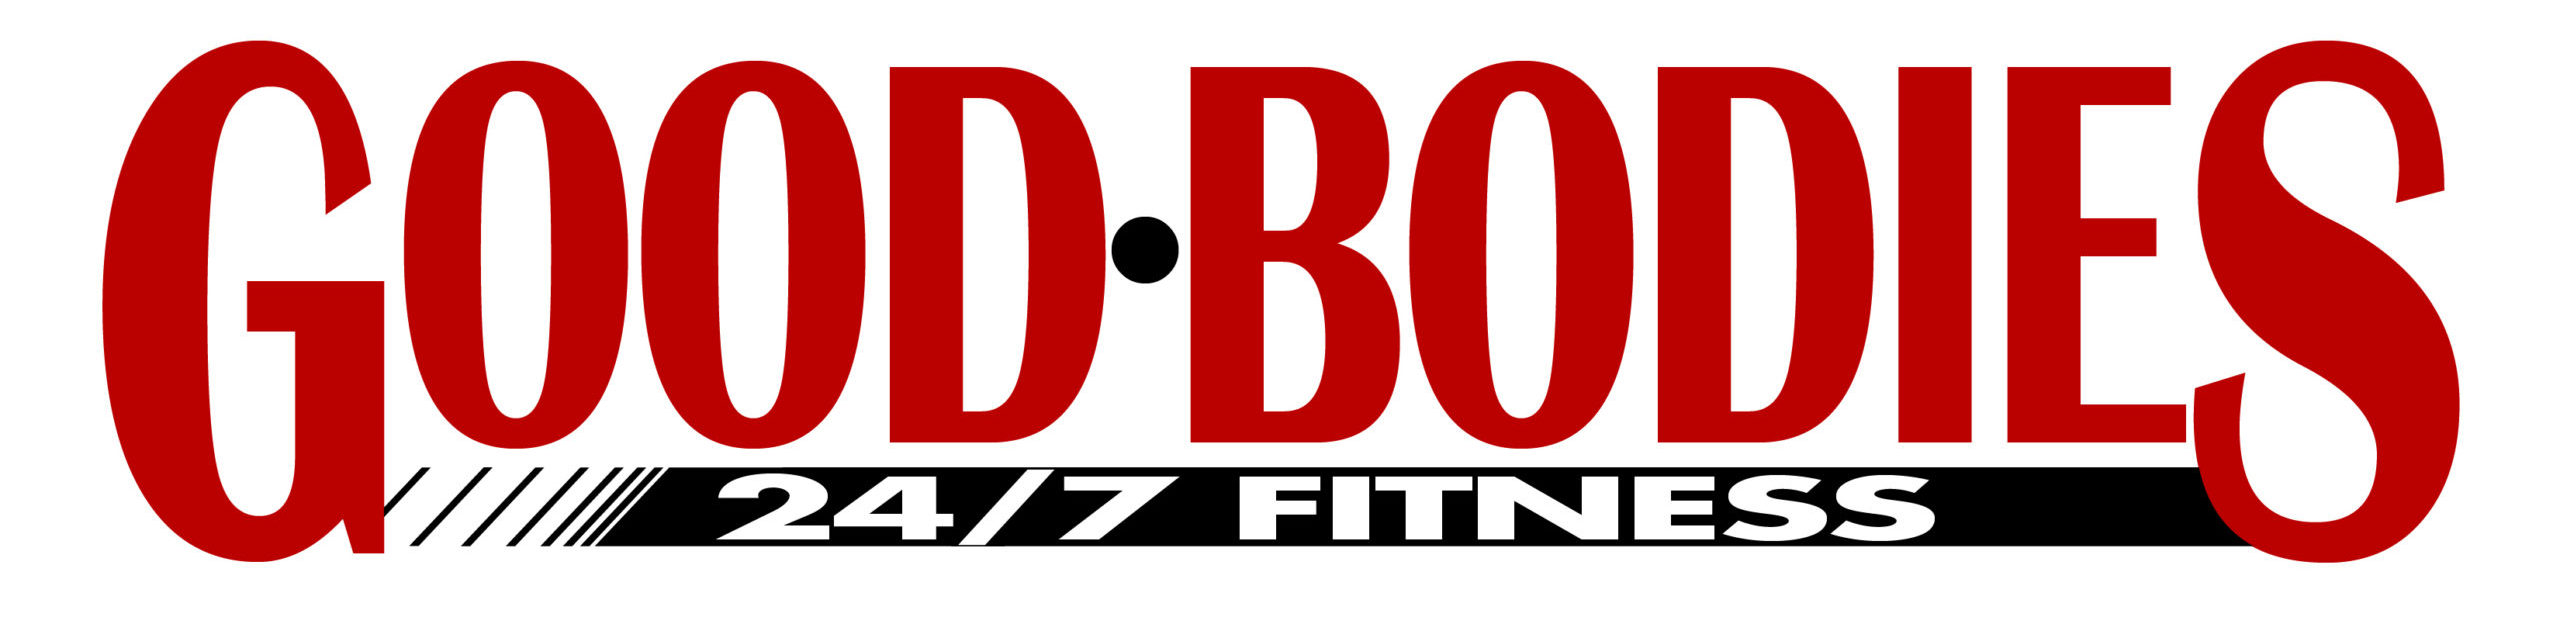 GoodBodies 24/7 Fitness